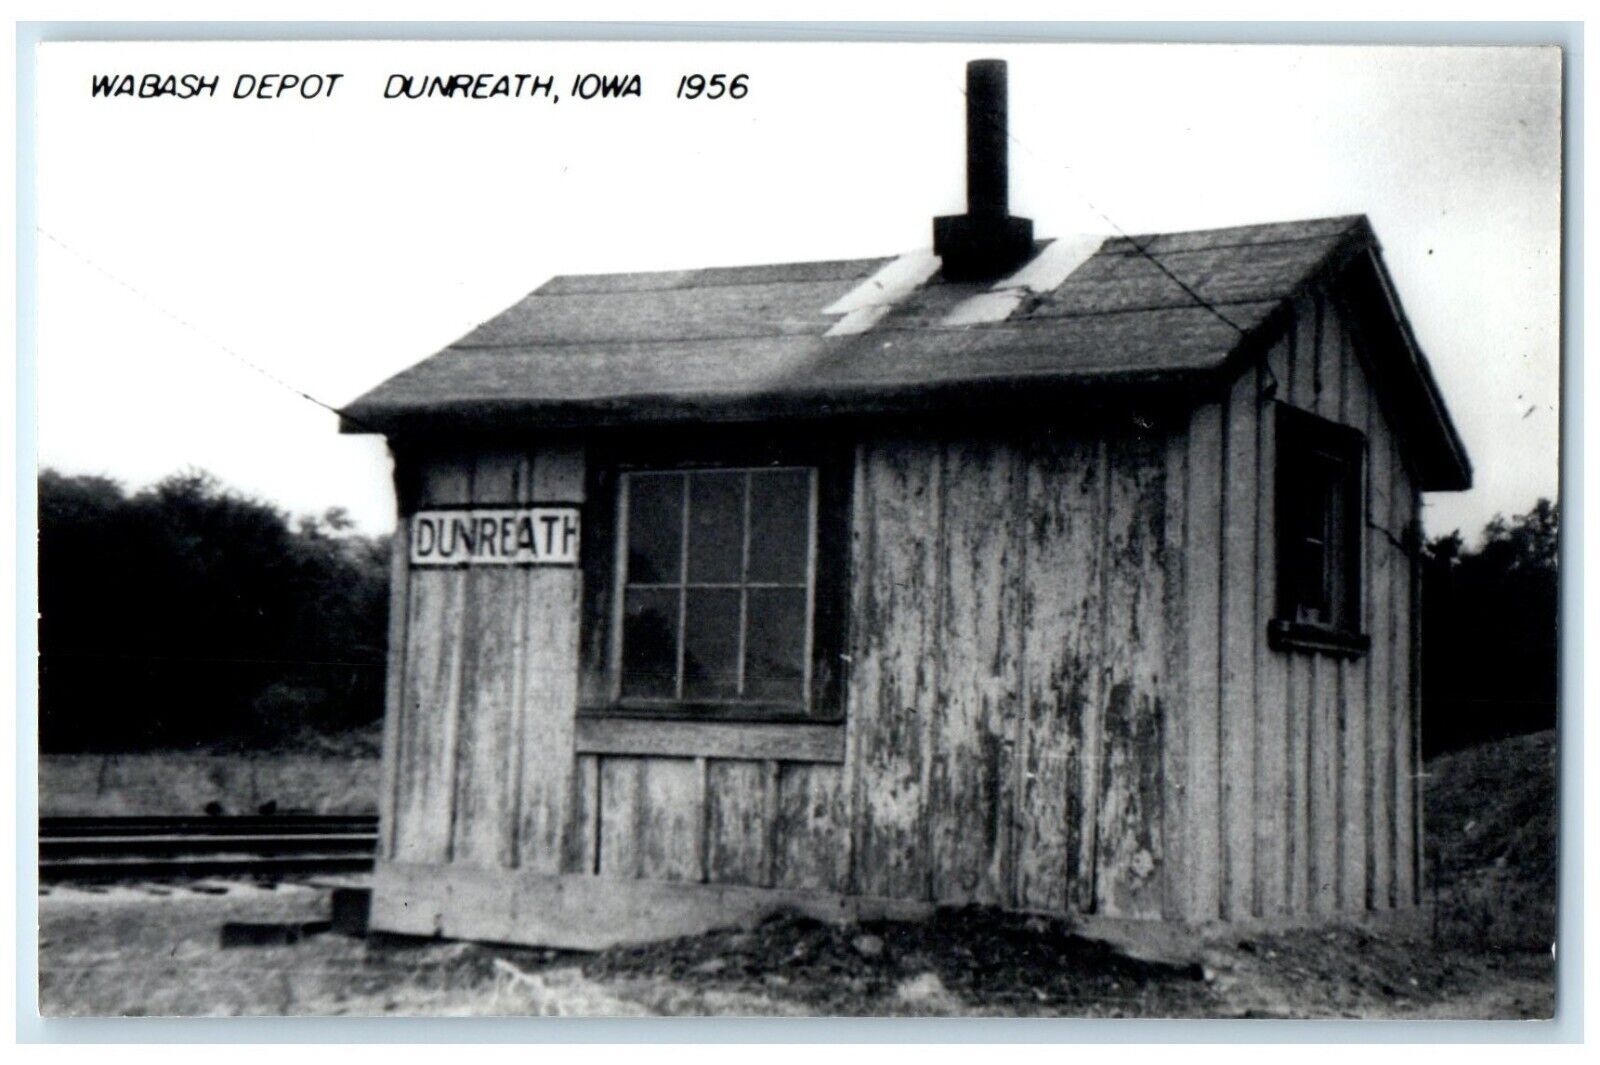 1956 Wabash Depot Dunreath Iowa Railroad Train Depot Station RPPC Photo Postcard